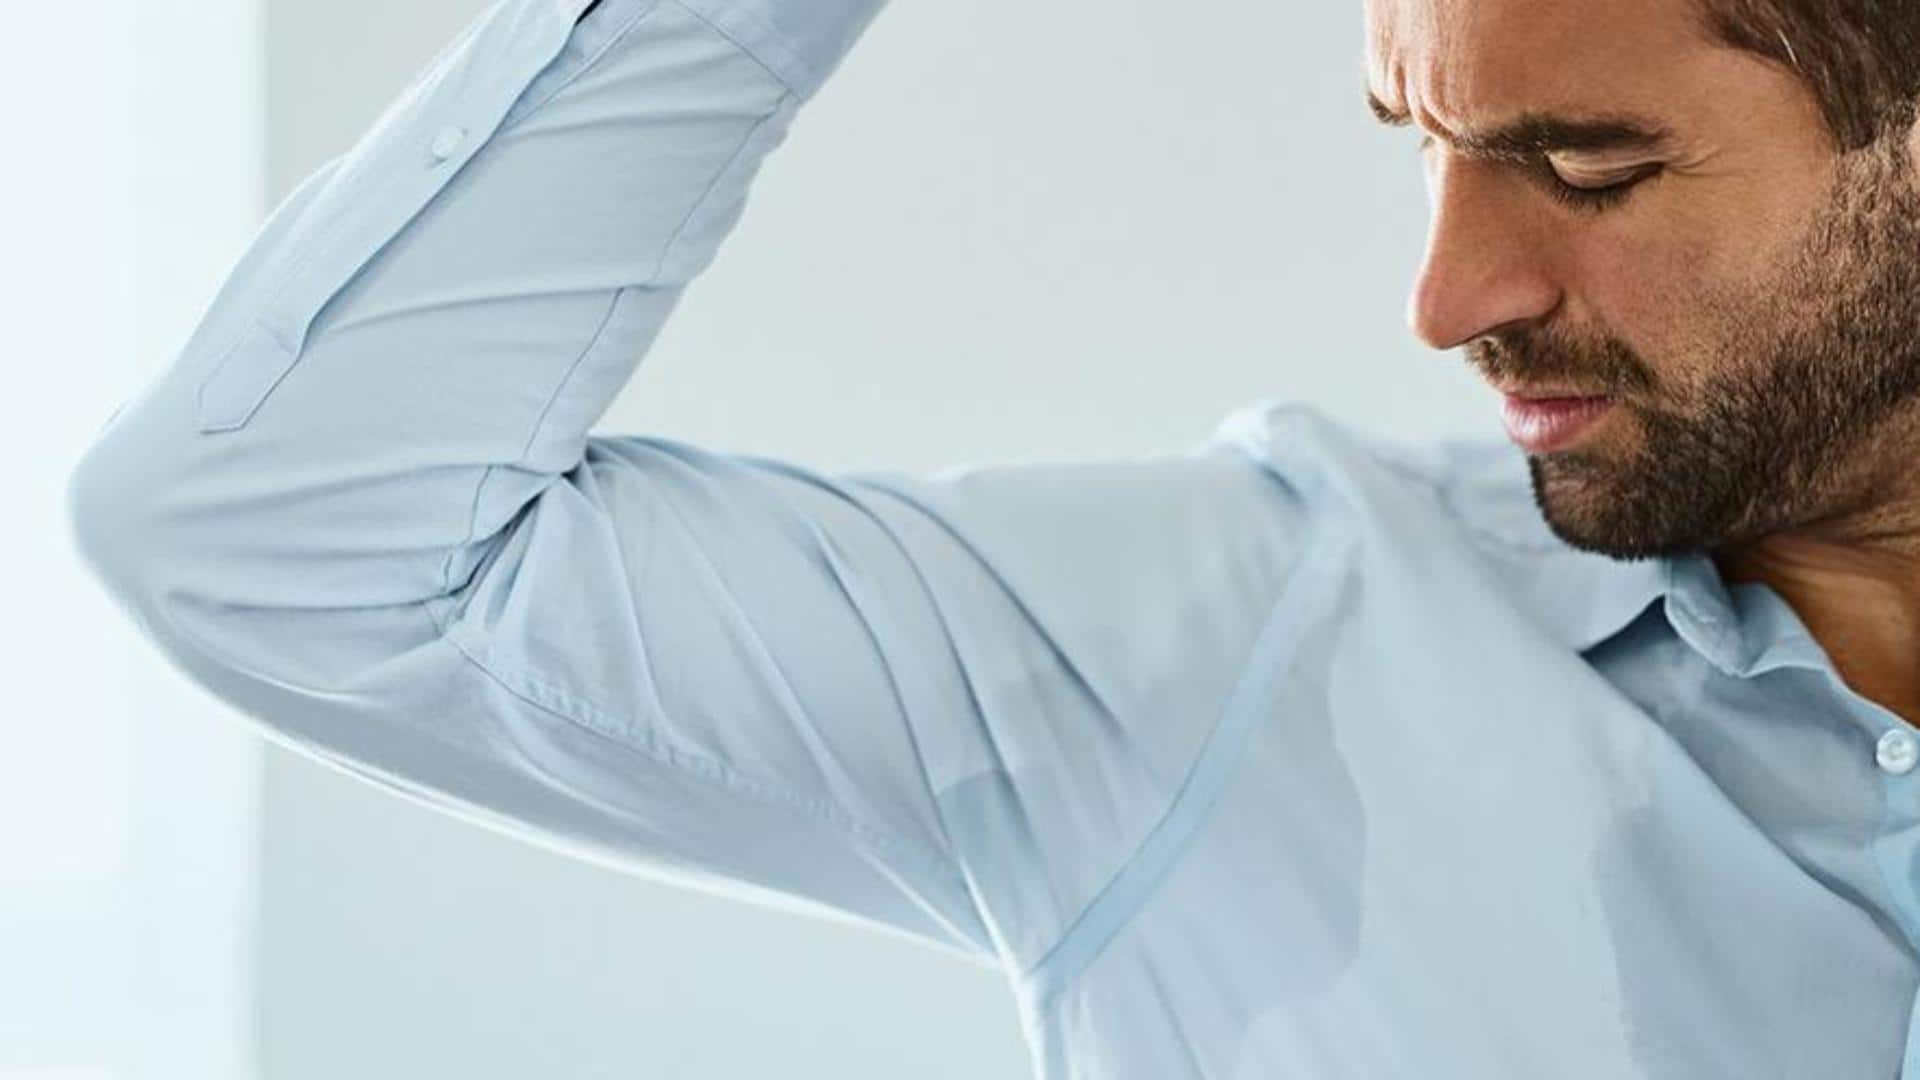 Human sweat odors might boost mental health treatment, finds study